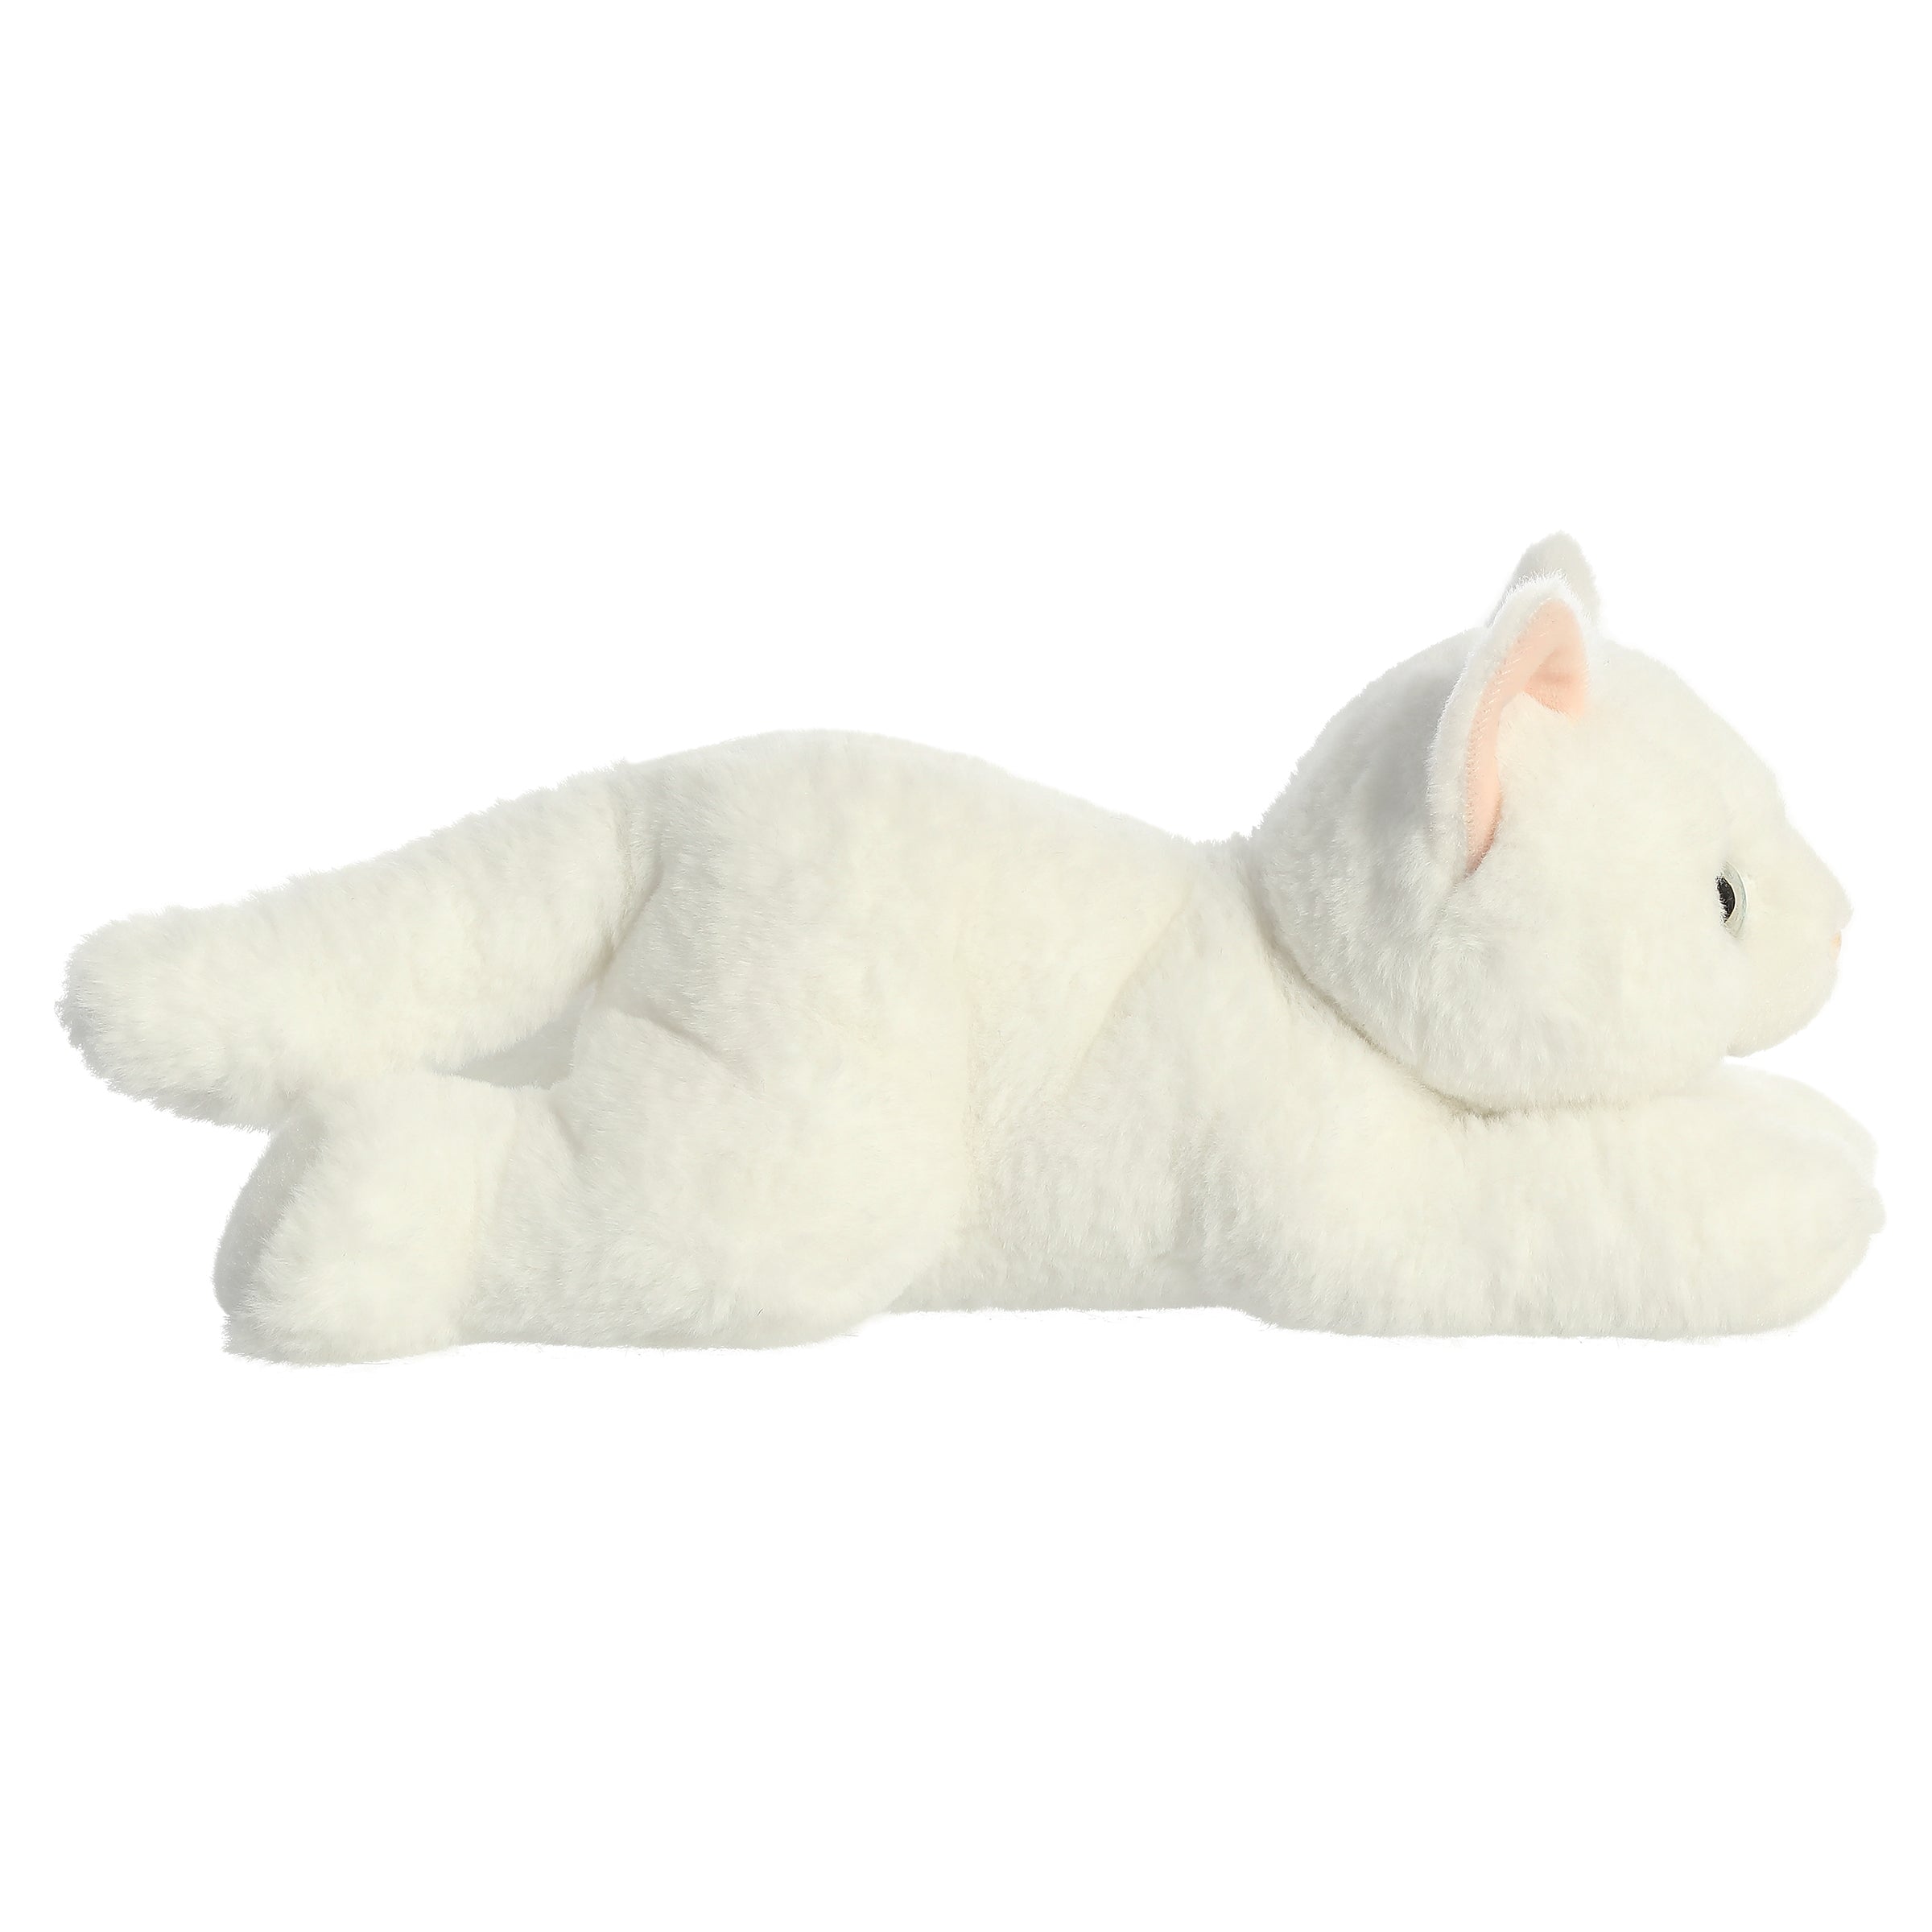 Aurora® - Flopsie™ - Precioso gatito blanco de 12"